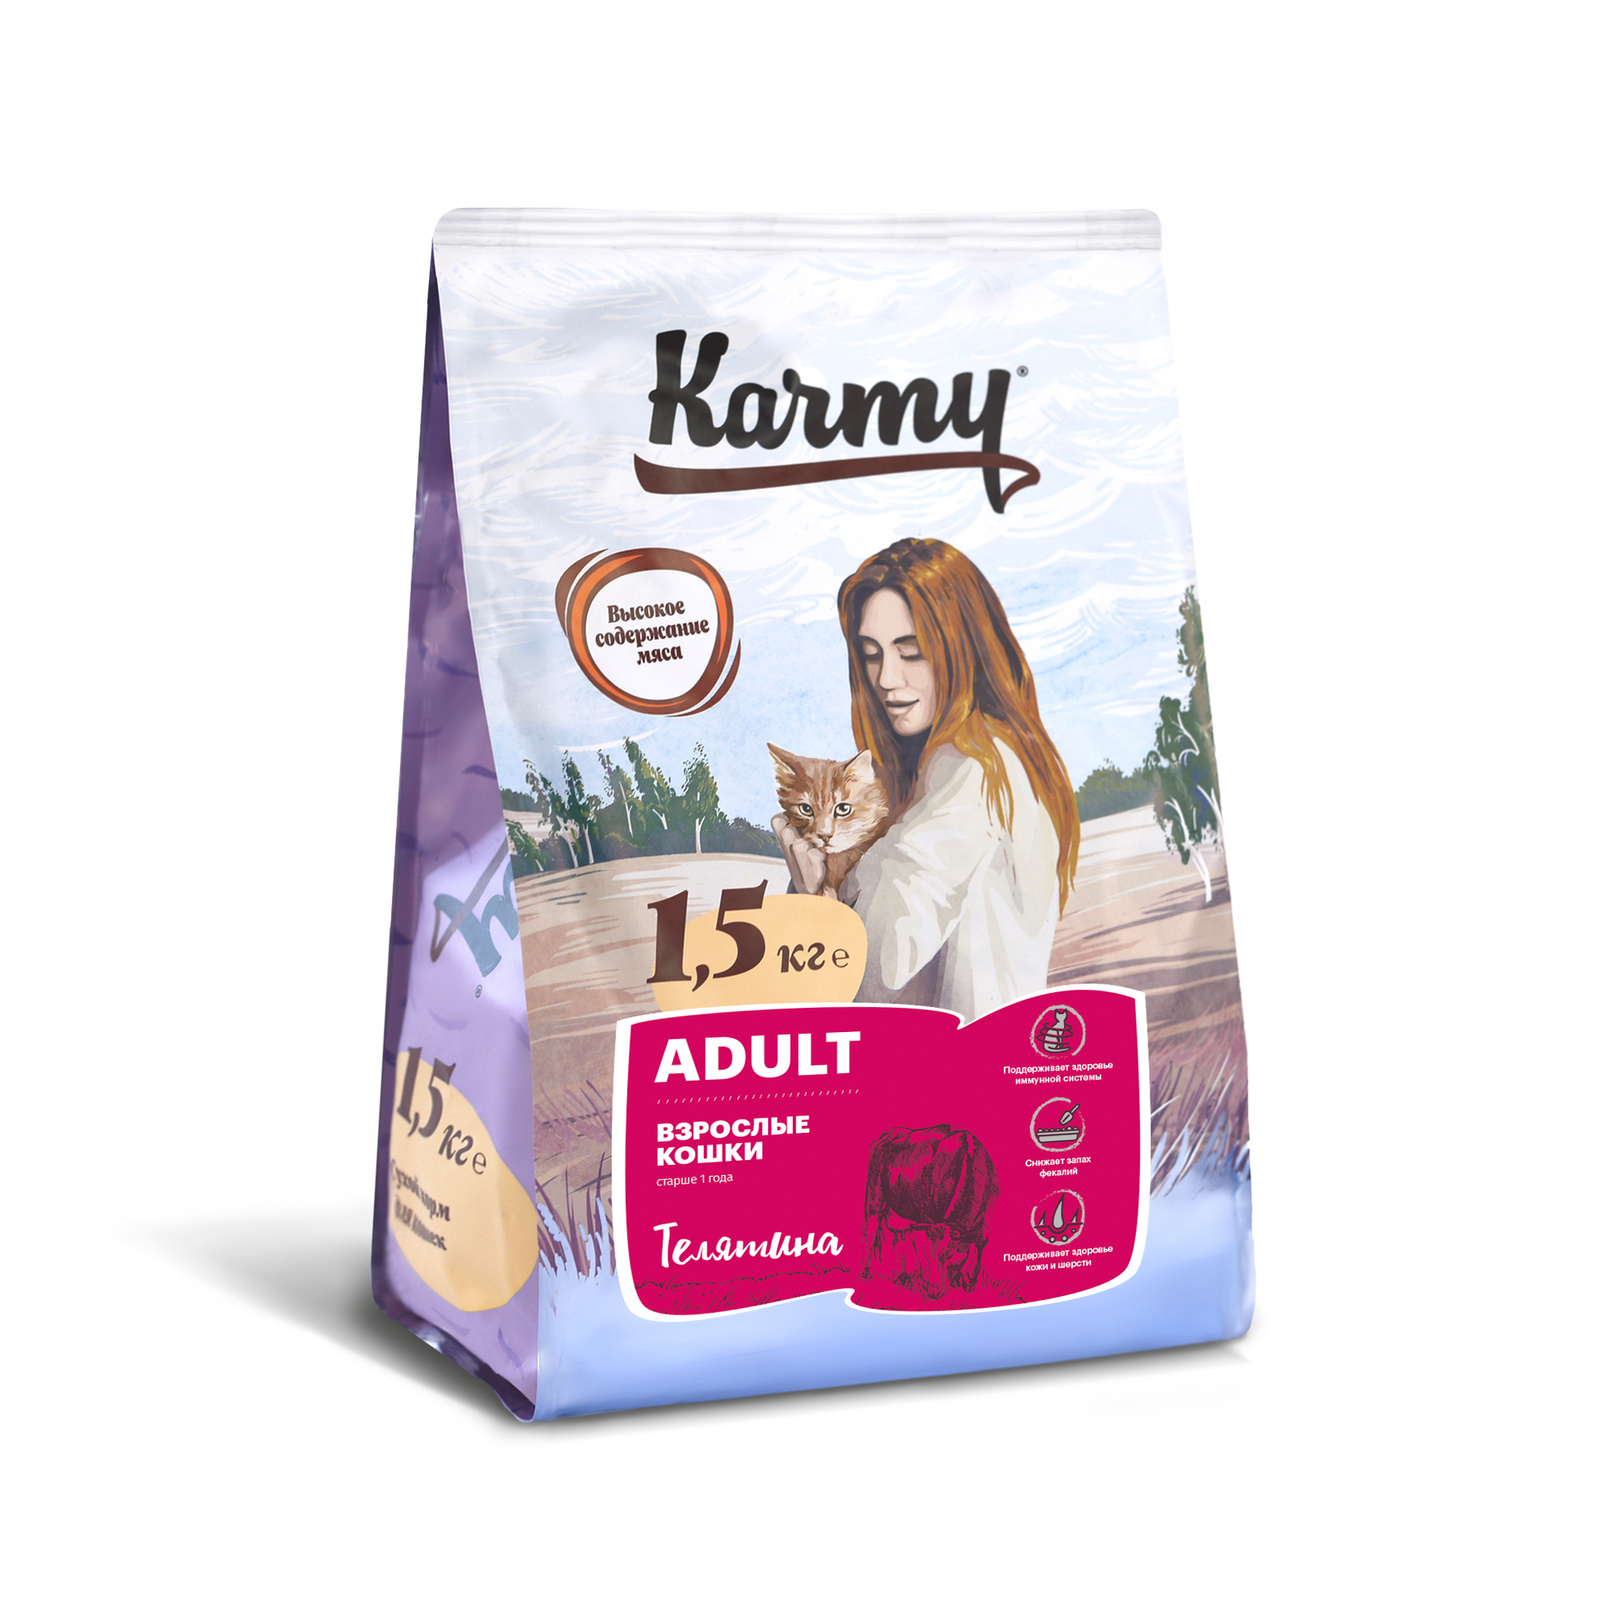 Karmy Корм Karmy сухой корм для взрослых кошек старше 1 года с телятиной (1,5 кг) karmy корм karmy сухой корм для взрослых кошек старше 1 года породы британская короткошерстная 1 5 кг